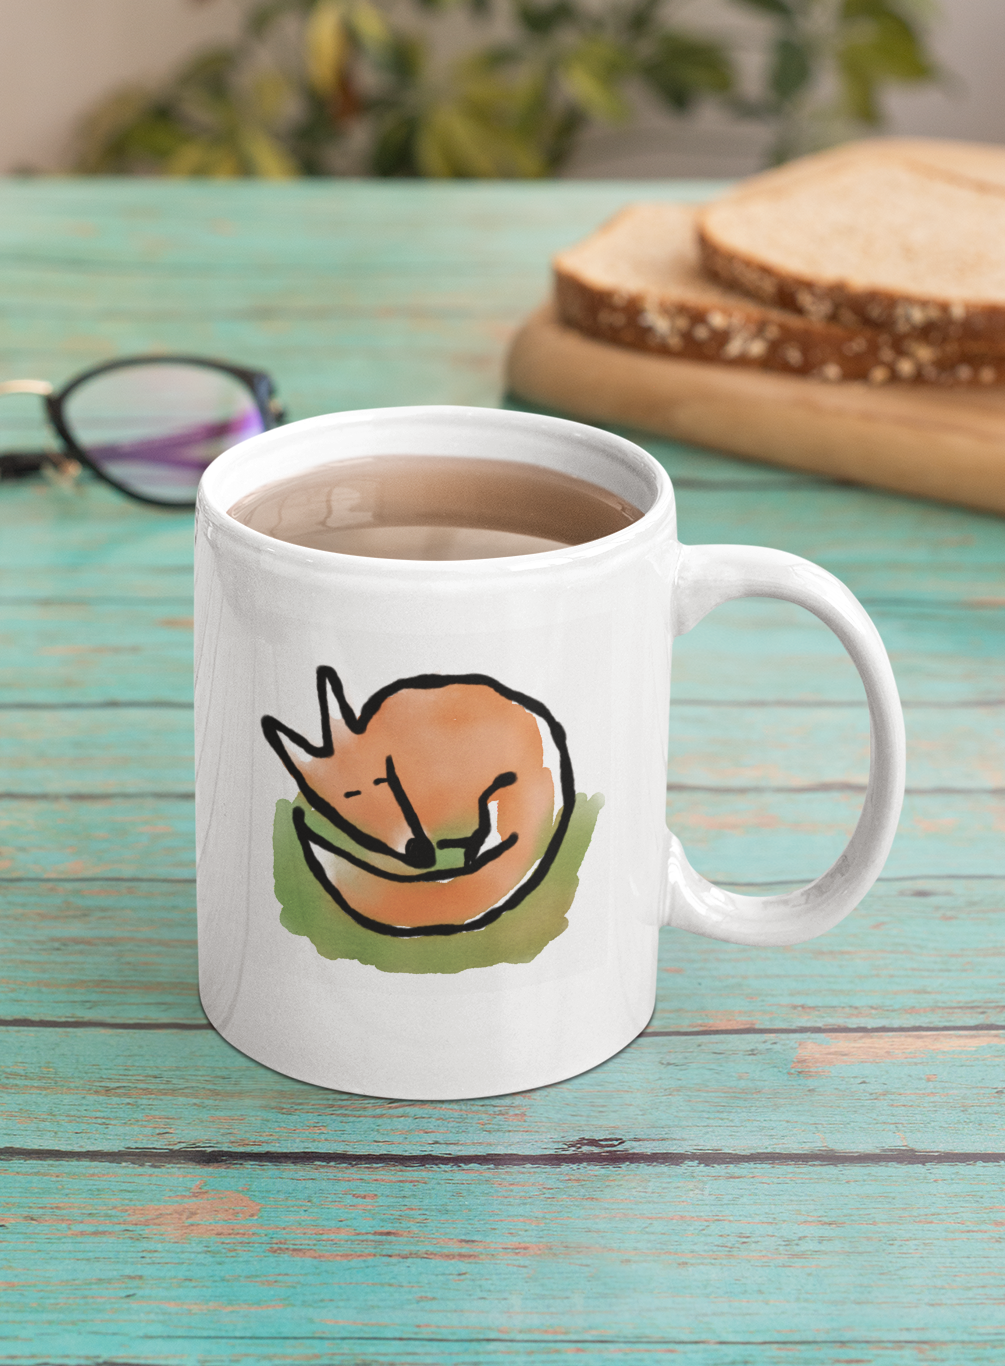 Sleeping Fox mug - Original illustrated Fox coffee mug by Hector and Bone on a table